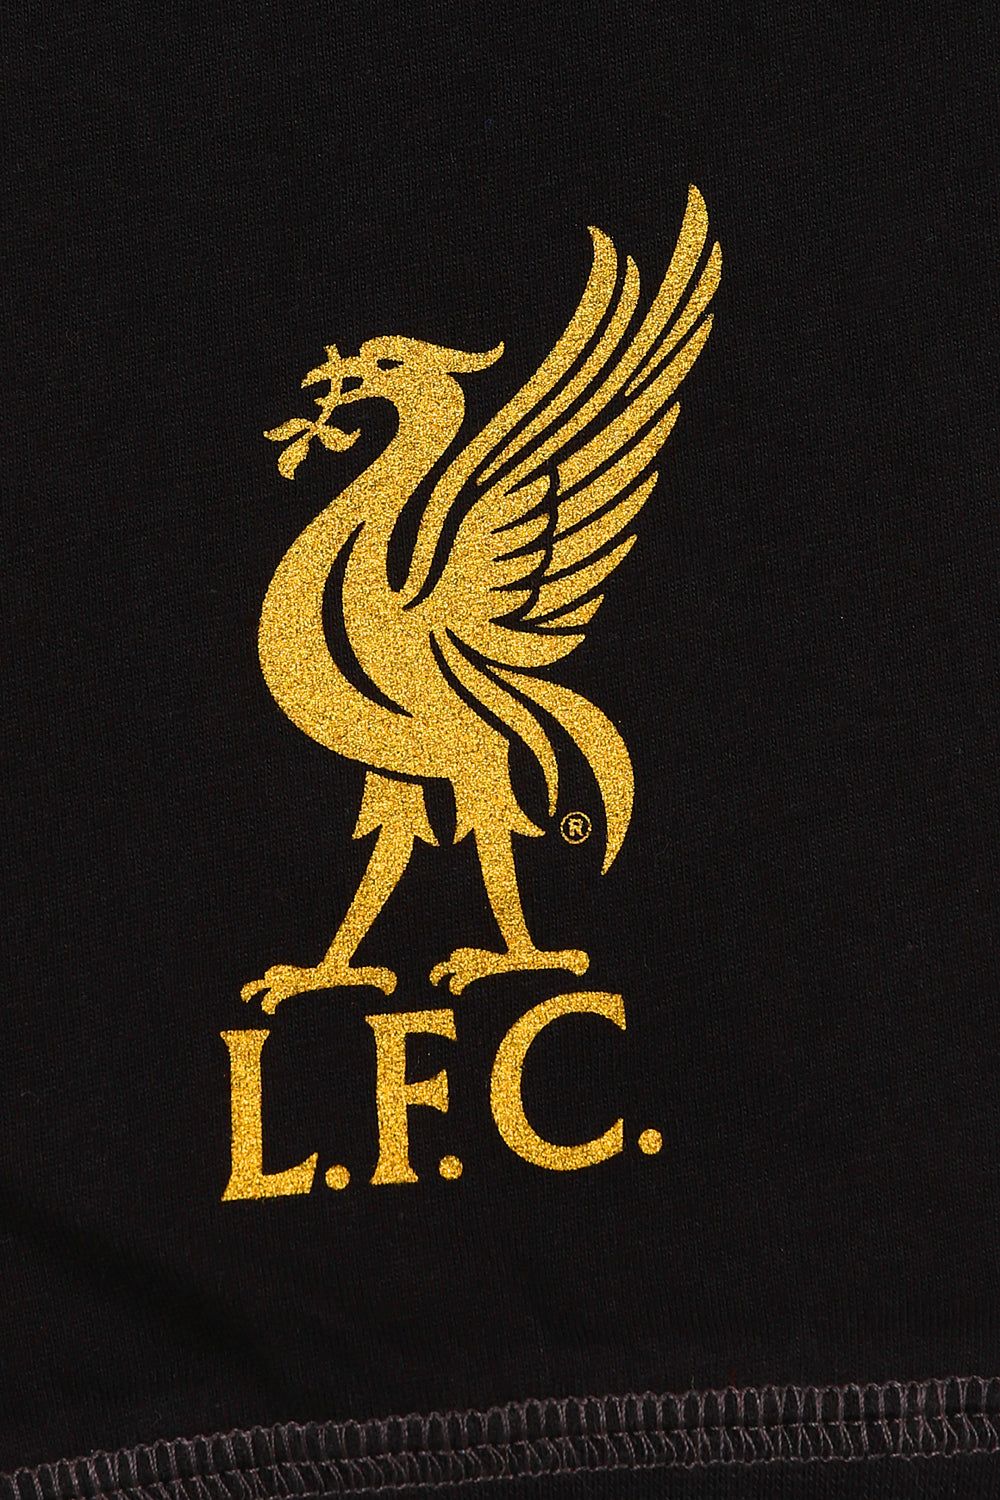 Boys Liverpool F.C Black Gold Long LFC Pyjamas - Pyjamas.com